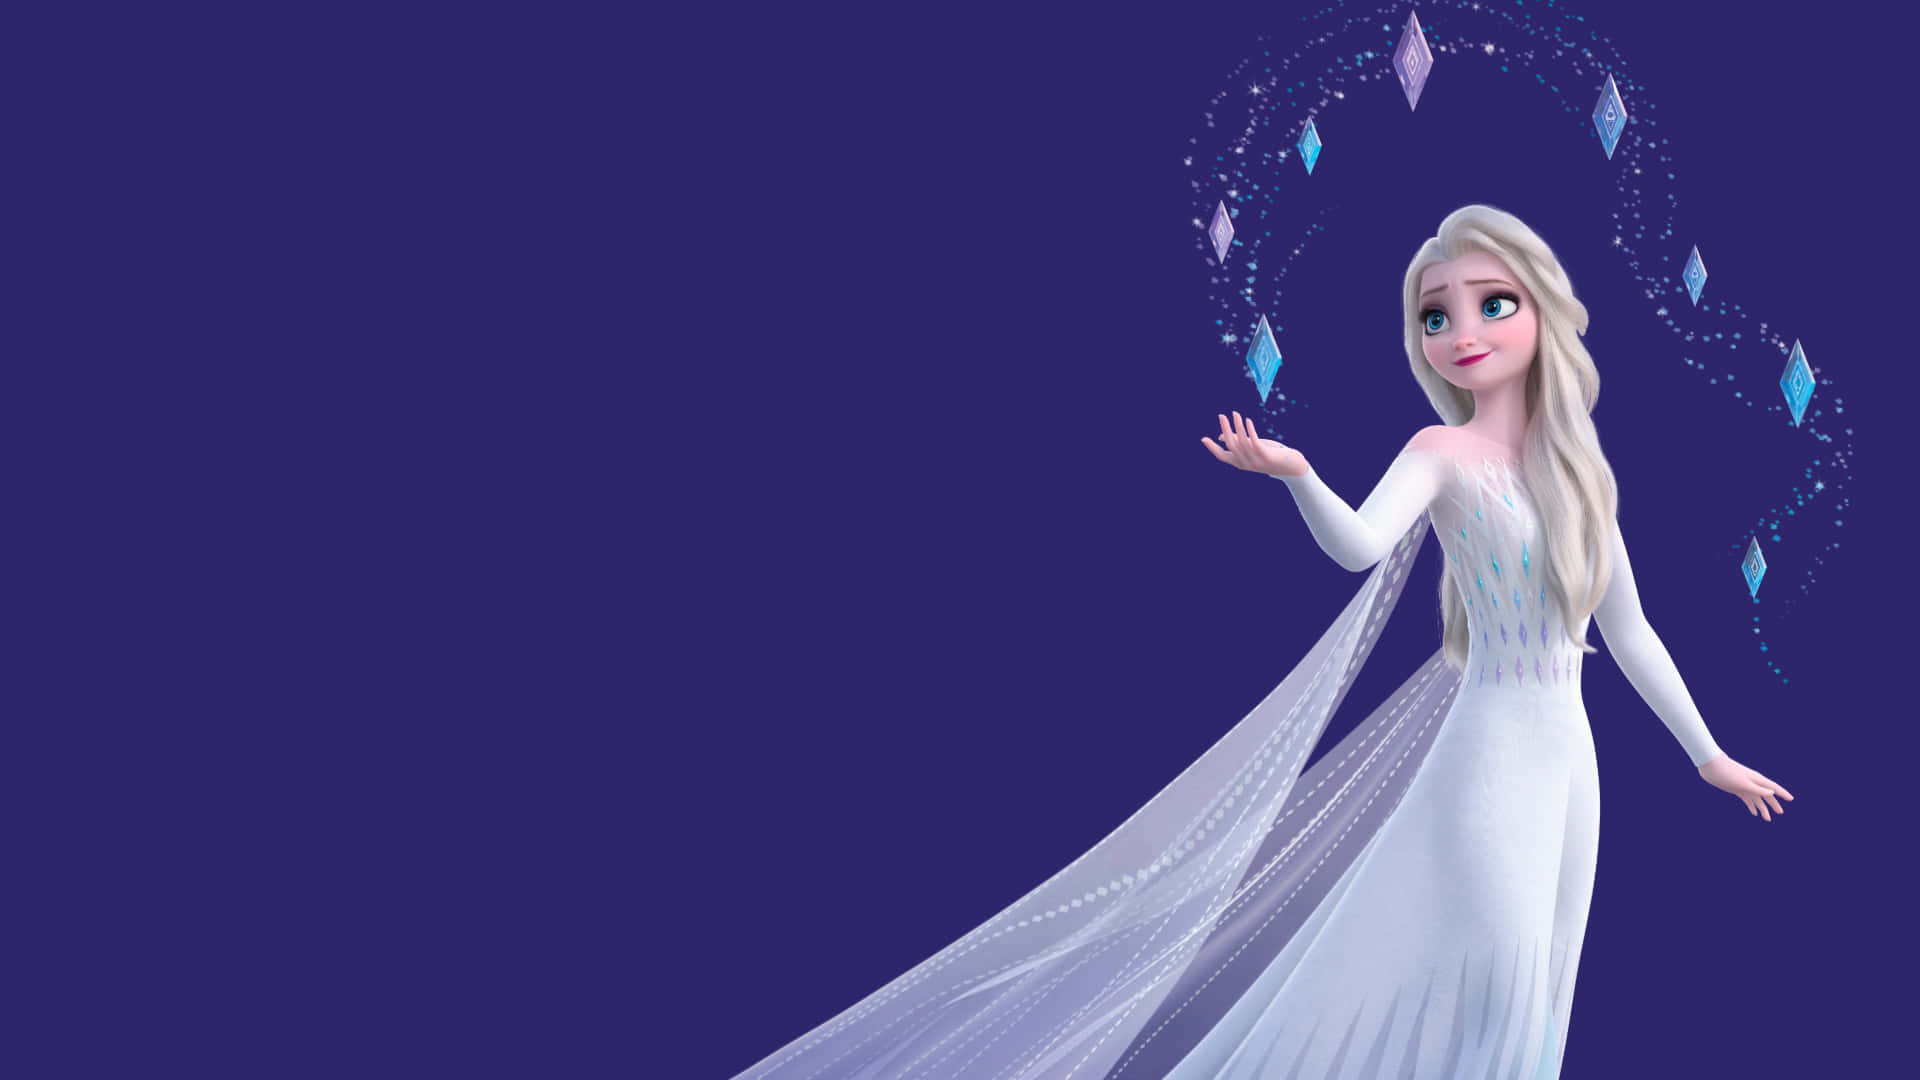 Let go and let Elsa embrace your soul